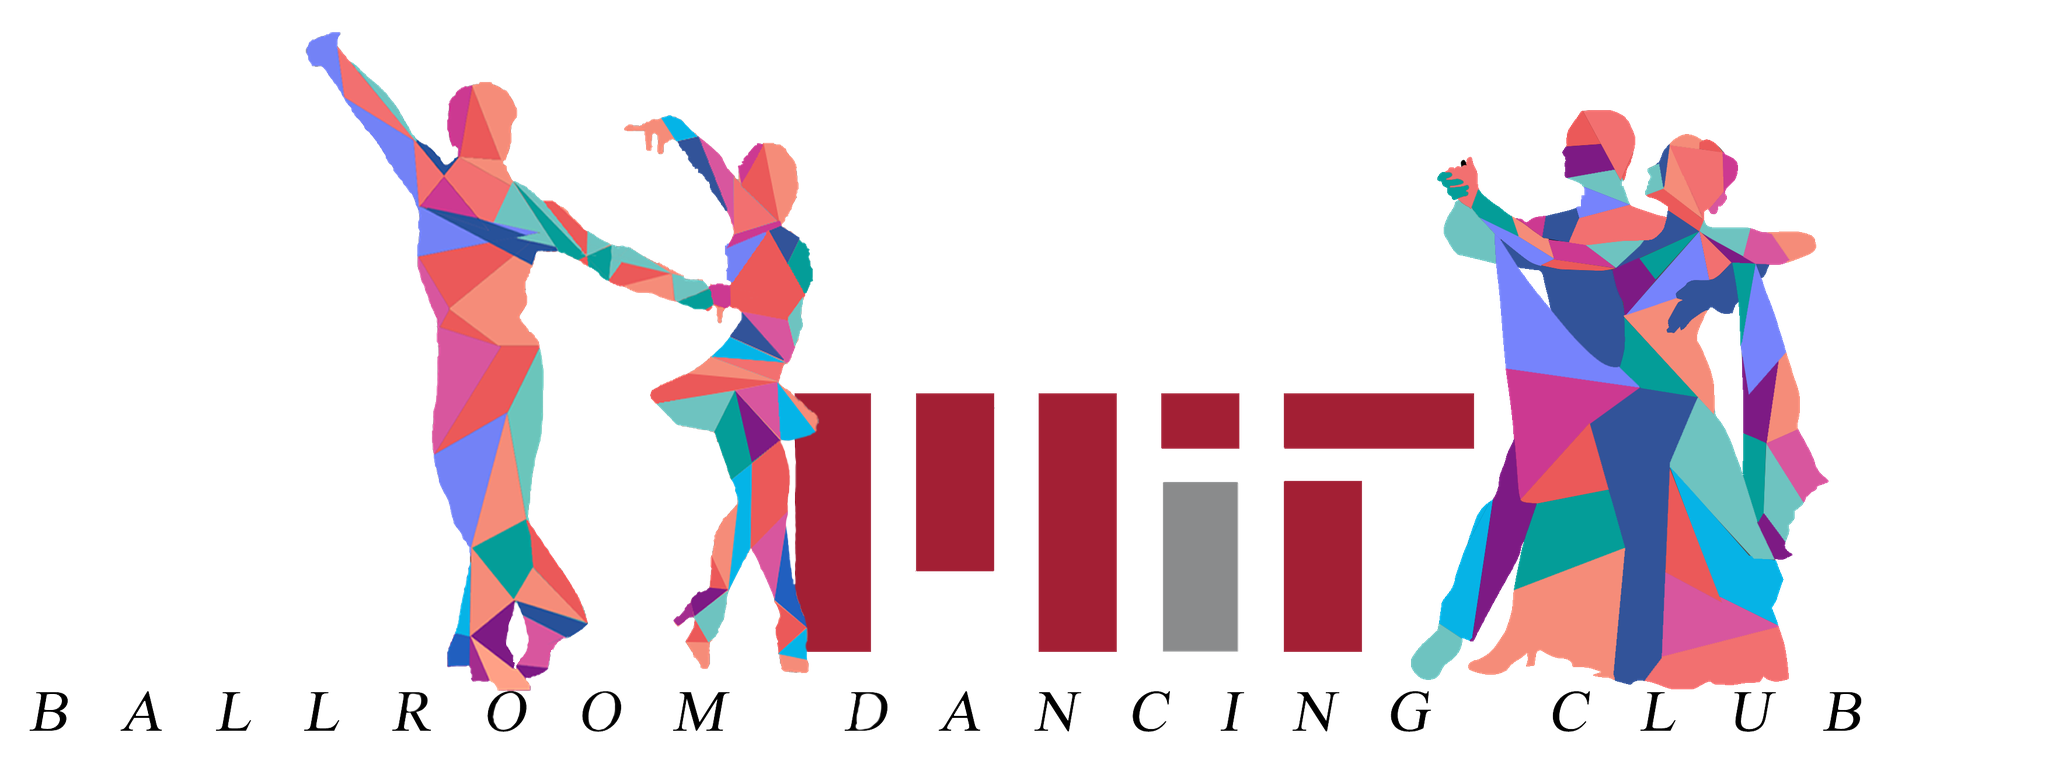 MIT Ballroom Dancing Club logo